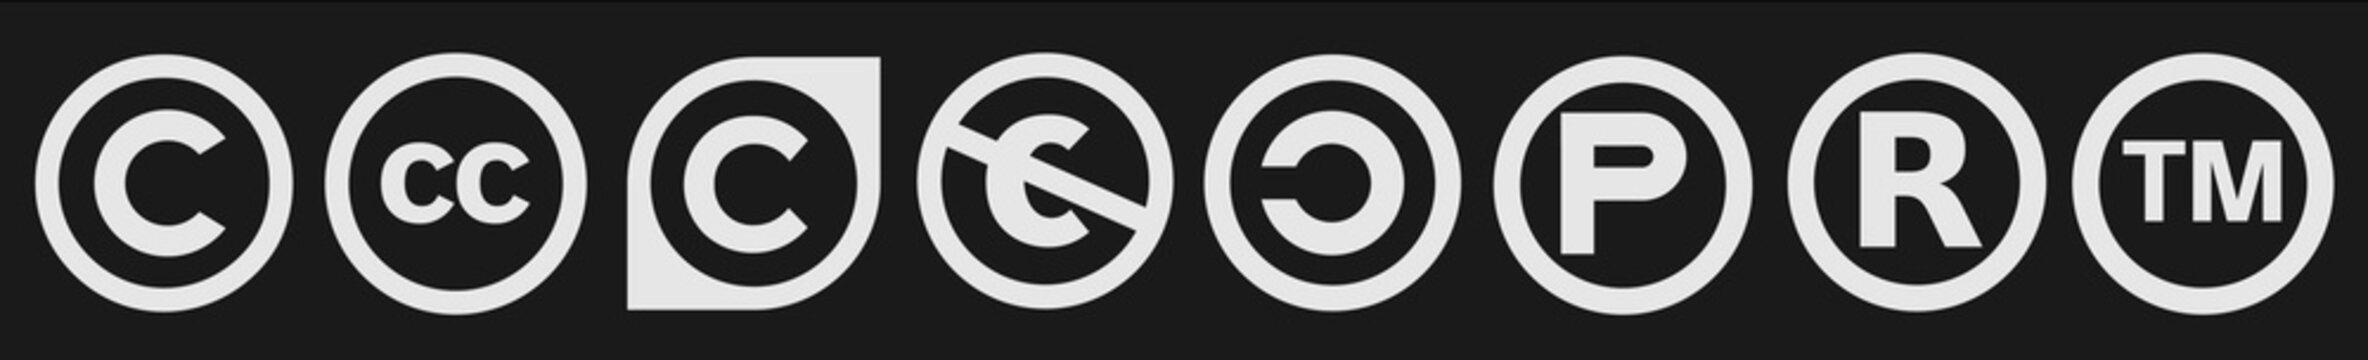 Copyright Symbols - Ai Illustrator